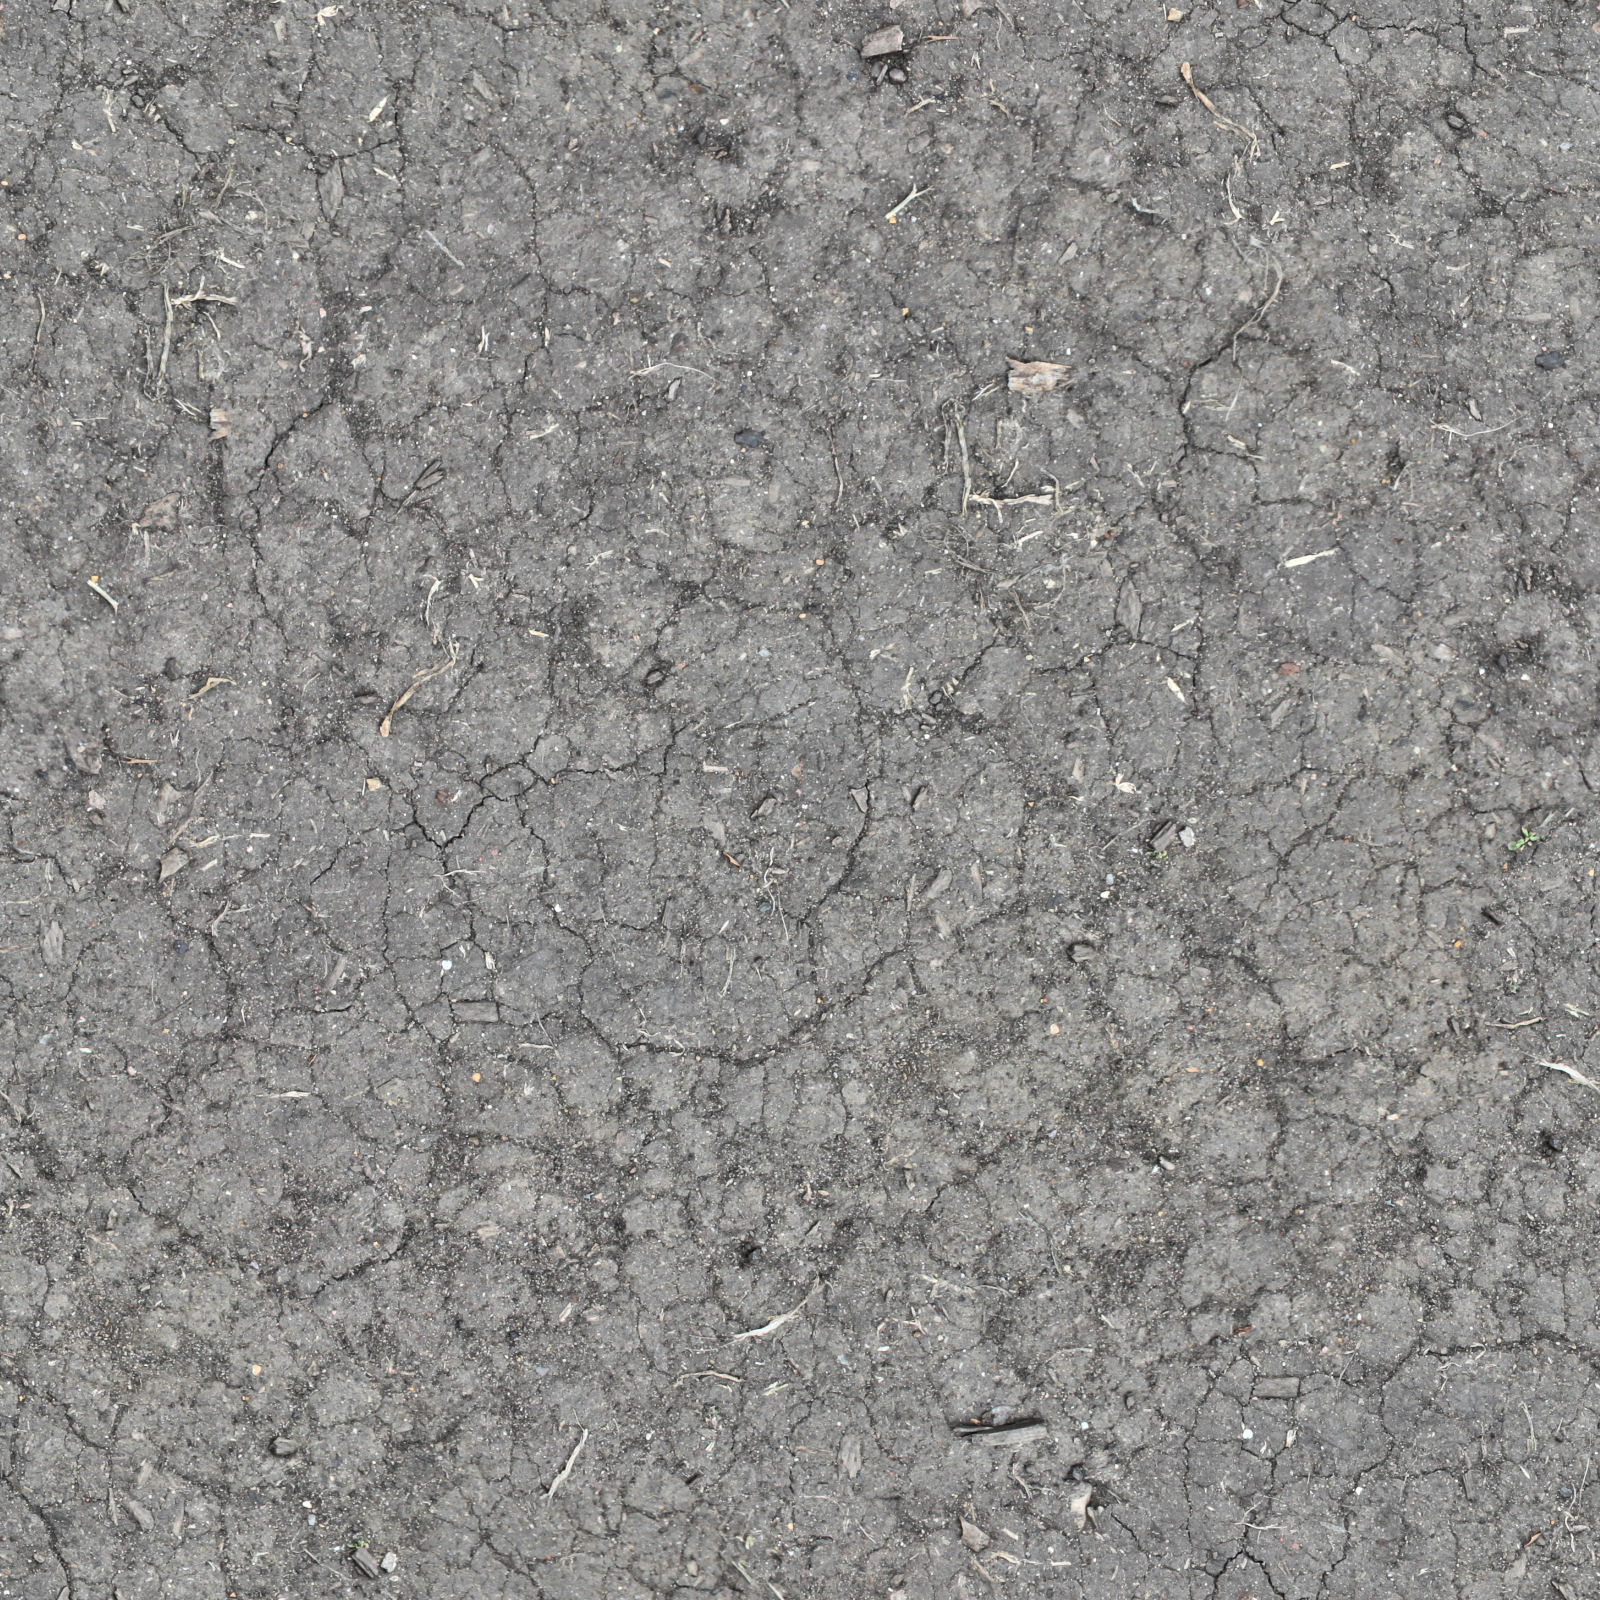 High Resolution Seamless Textures: Seamless hardened dirt ground texture